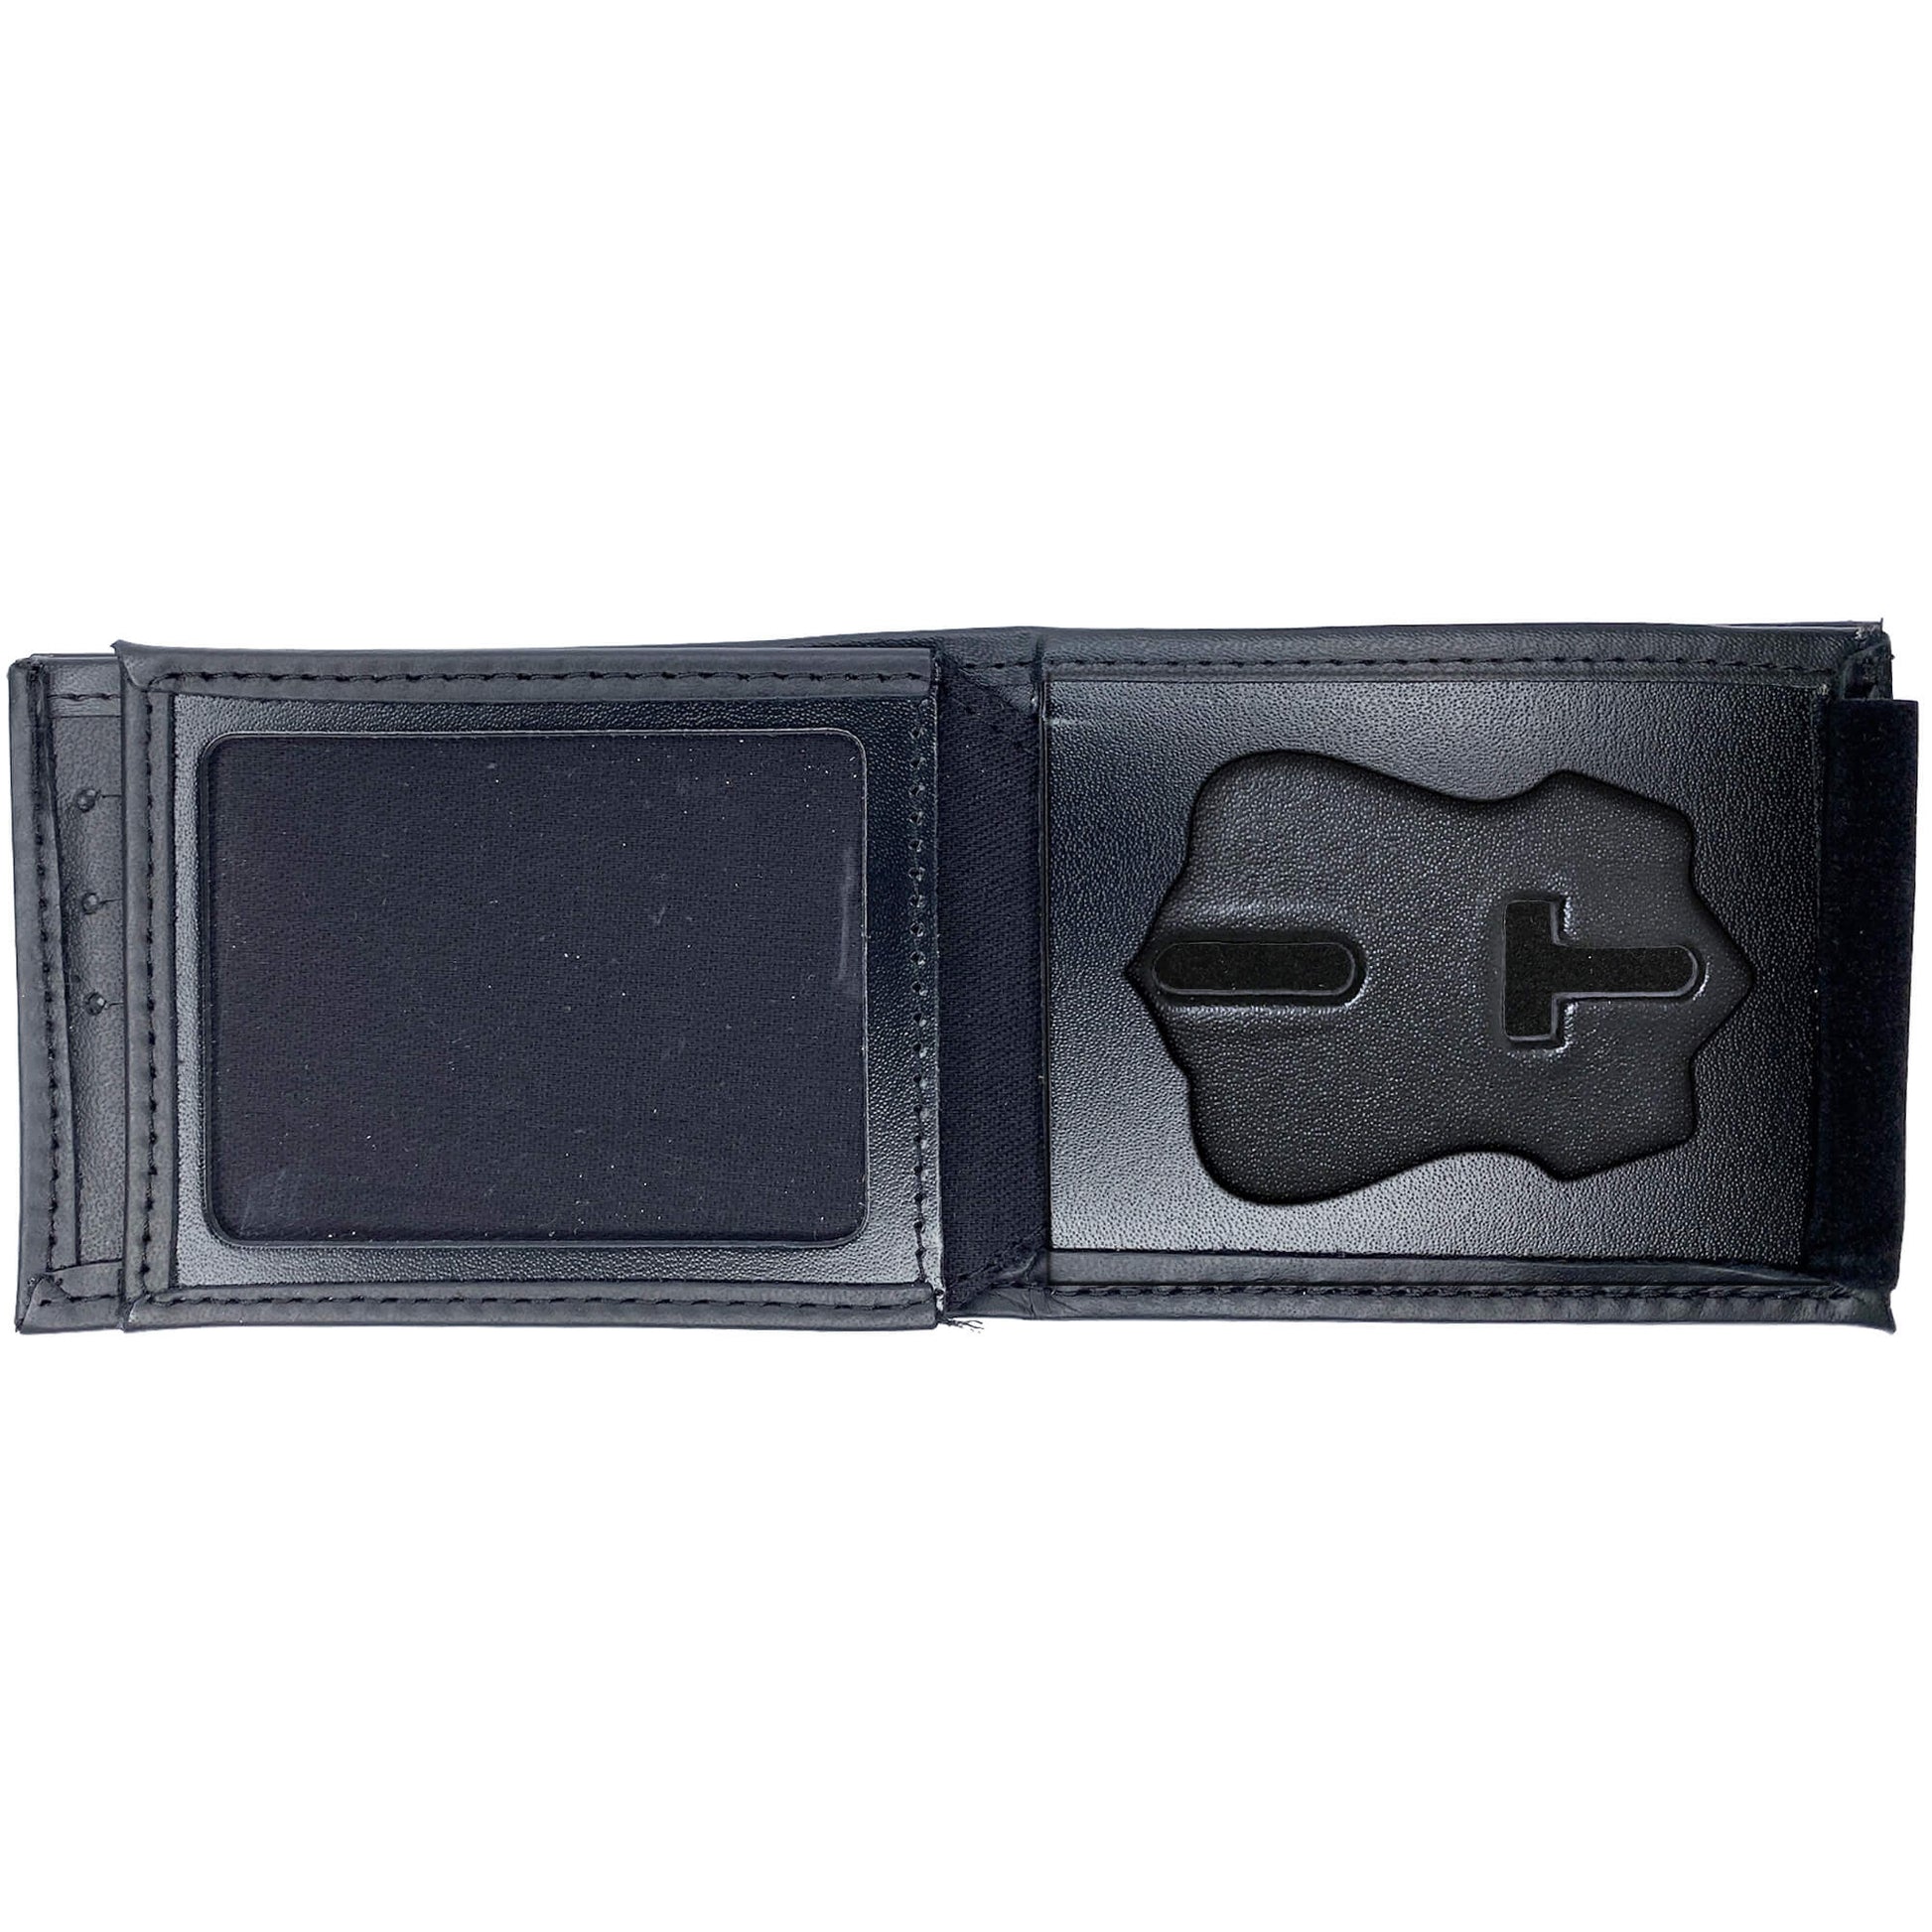 San Antonio Police Horizontal Bifold Hidden Badge Wallet-Perfect Fit-911 Duty Gear USA